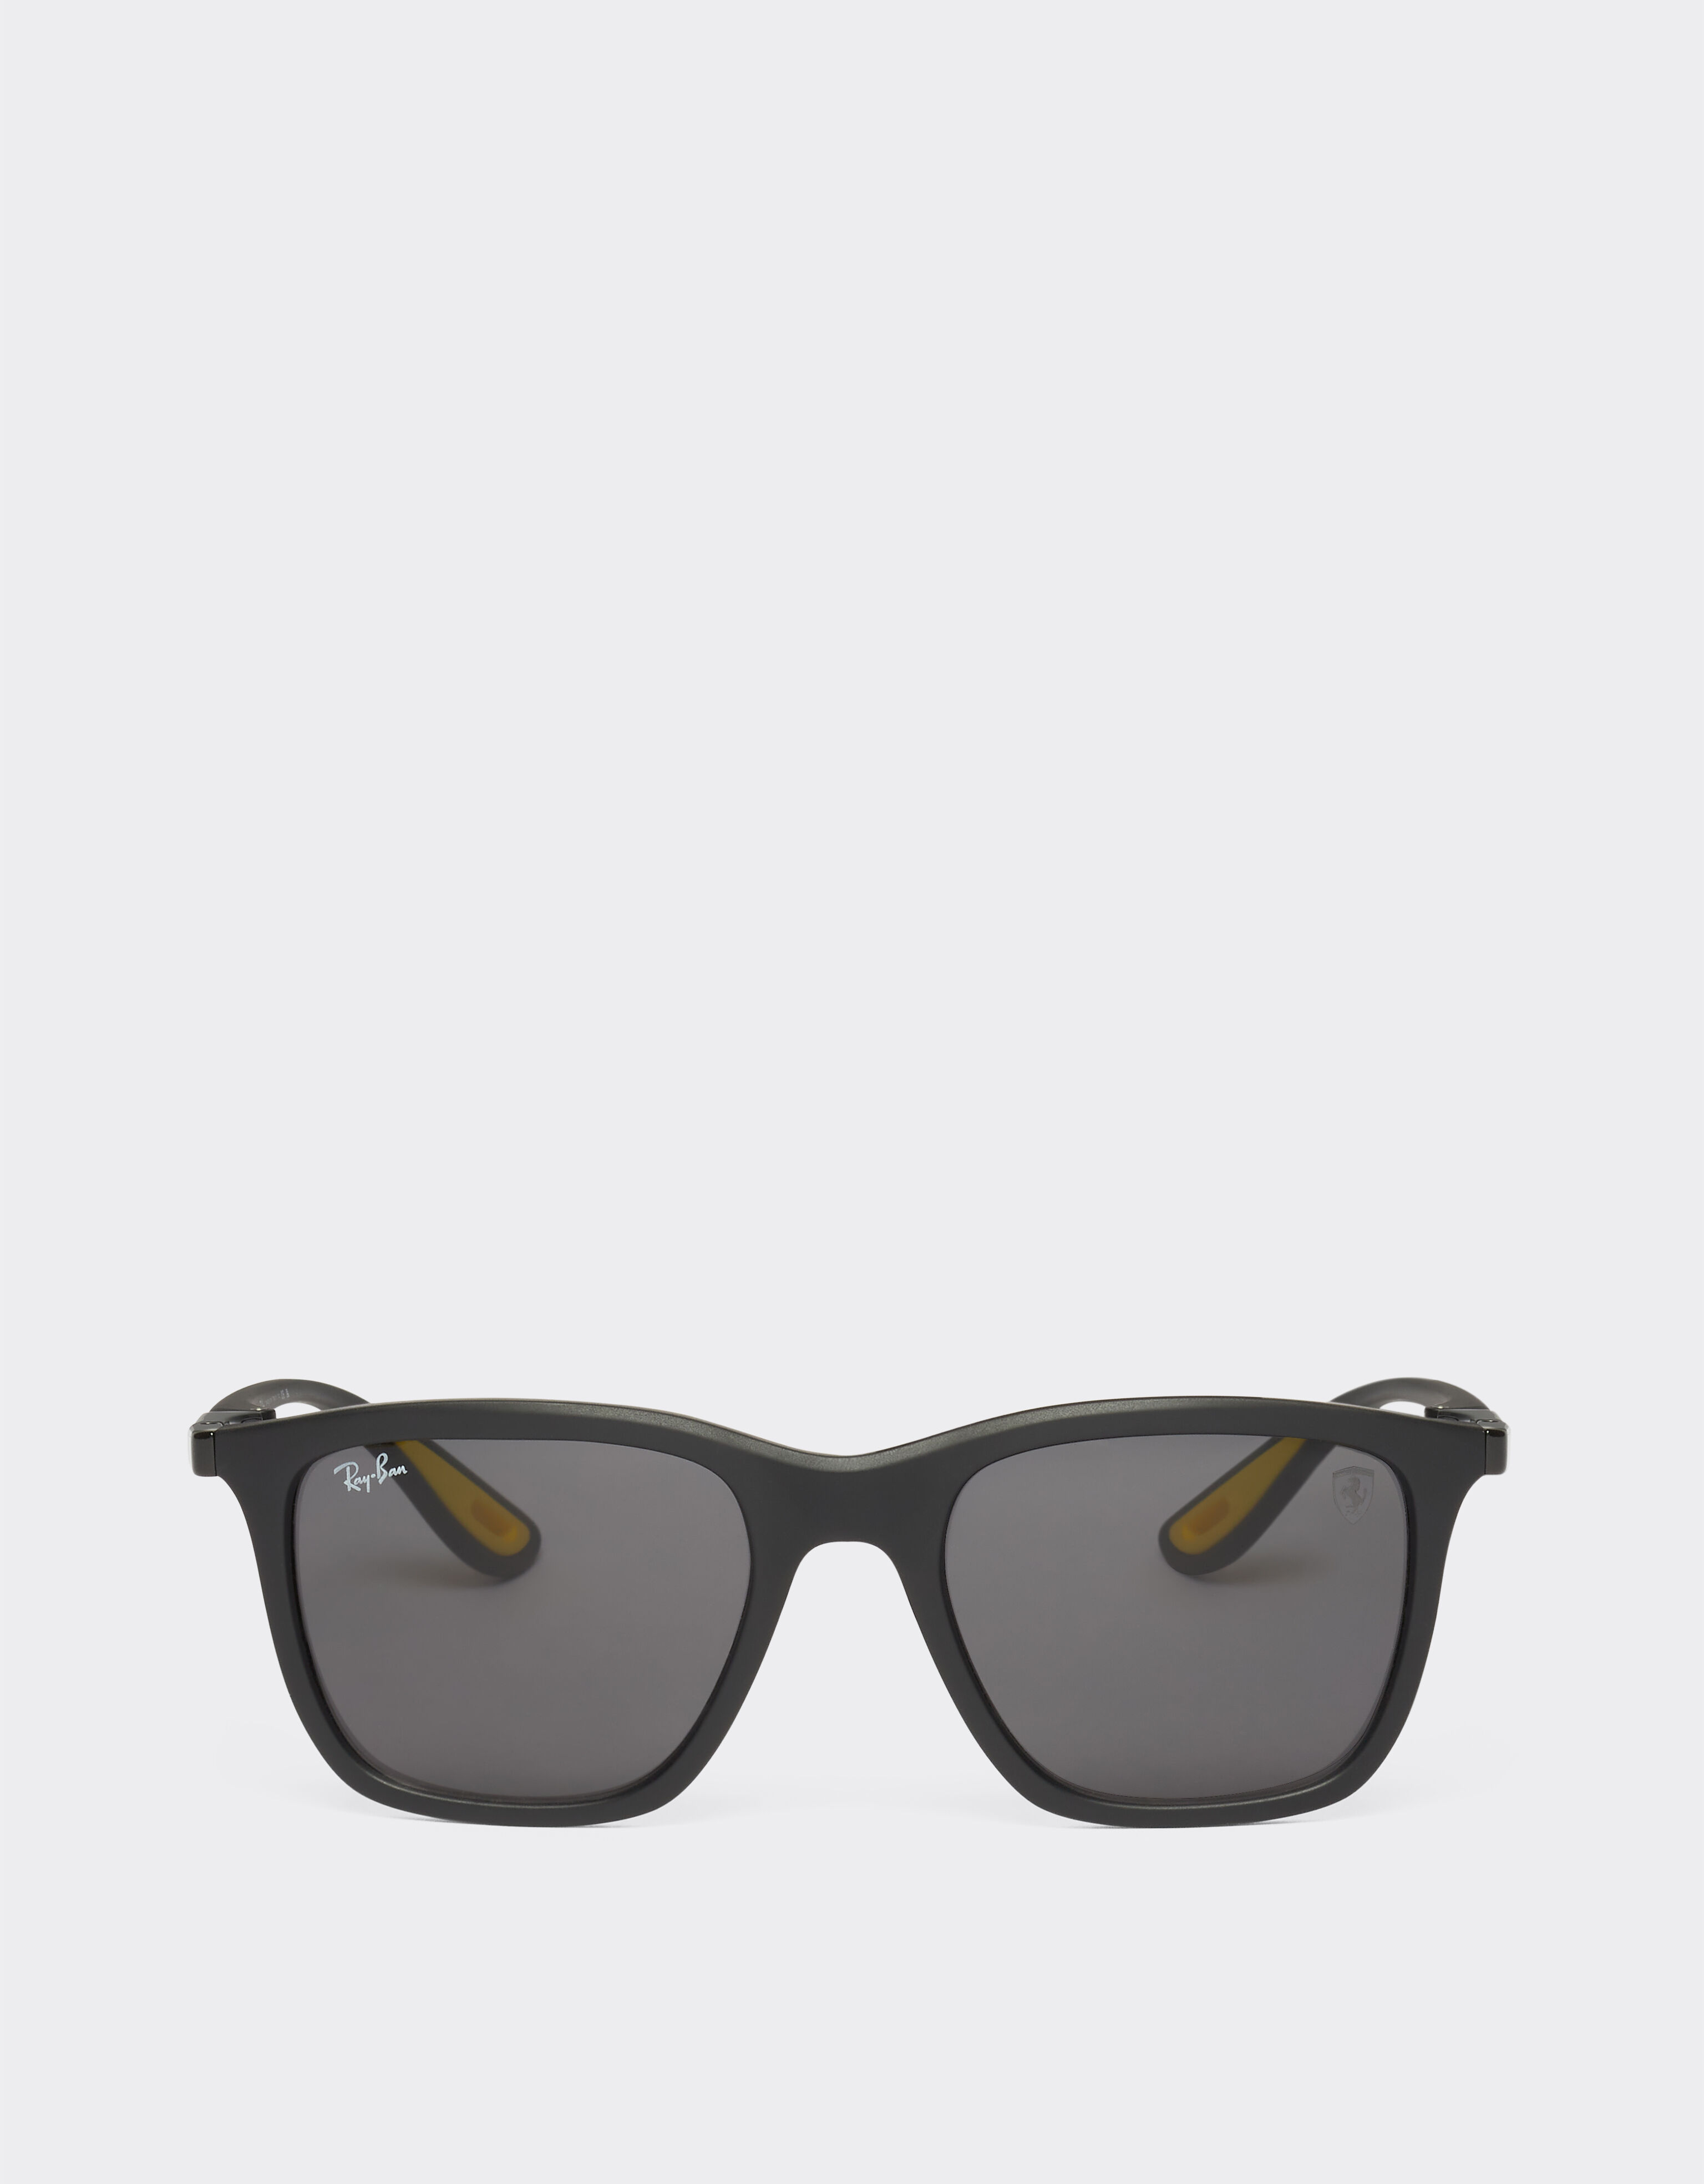 Ferrari Ray-Ban for Scuderia Ferrari 0RB4433M black sunglasses with dark grey lenses Black Matt F1257f